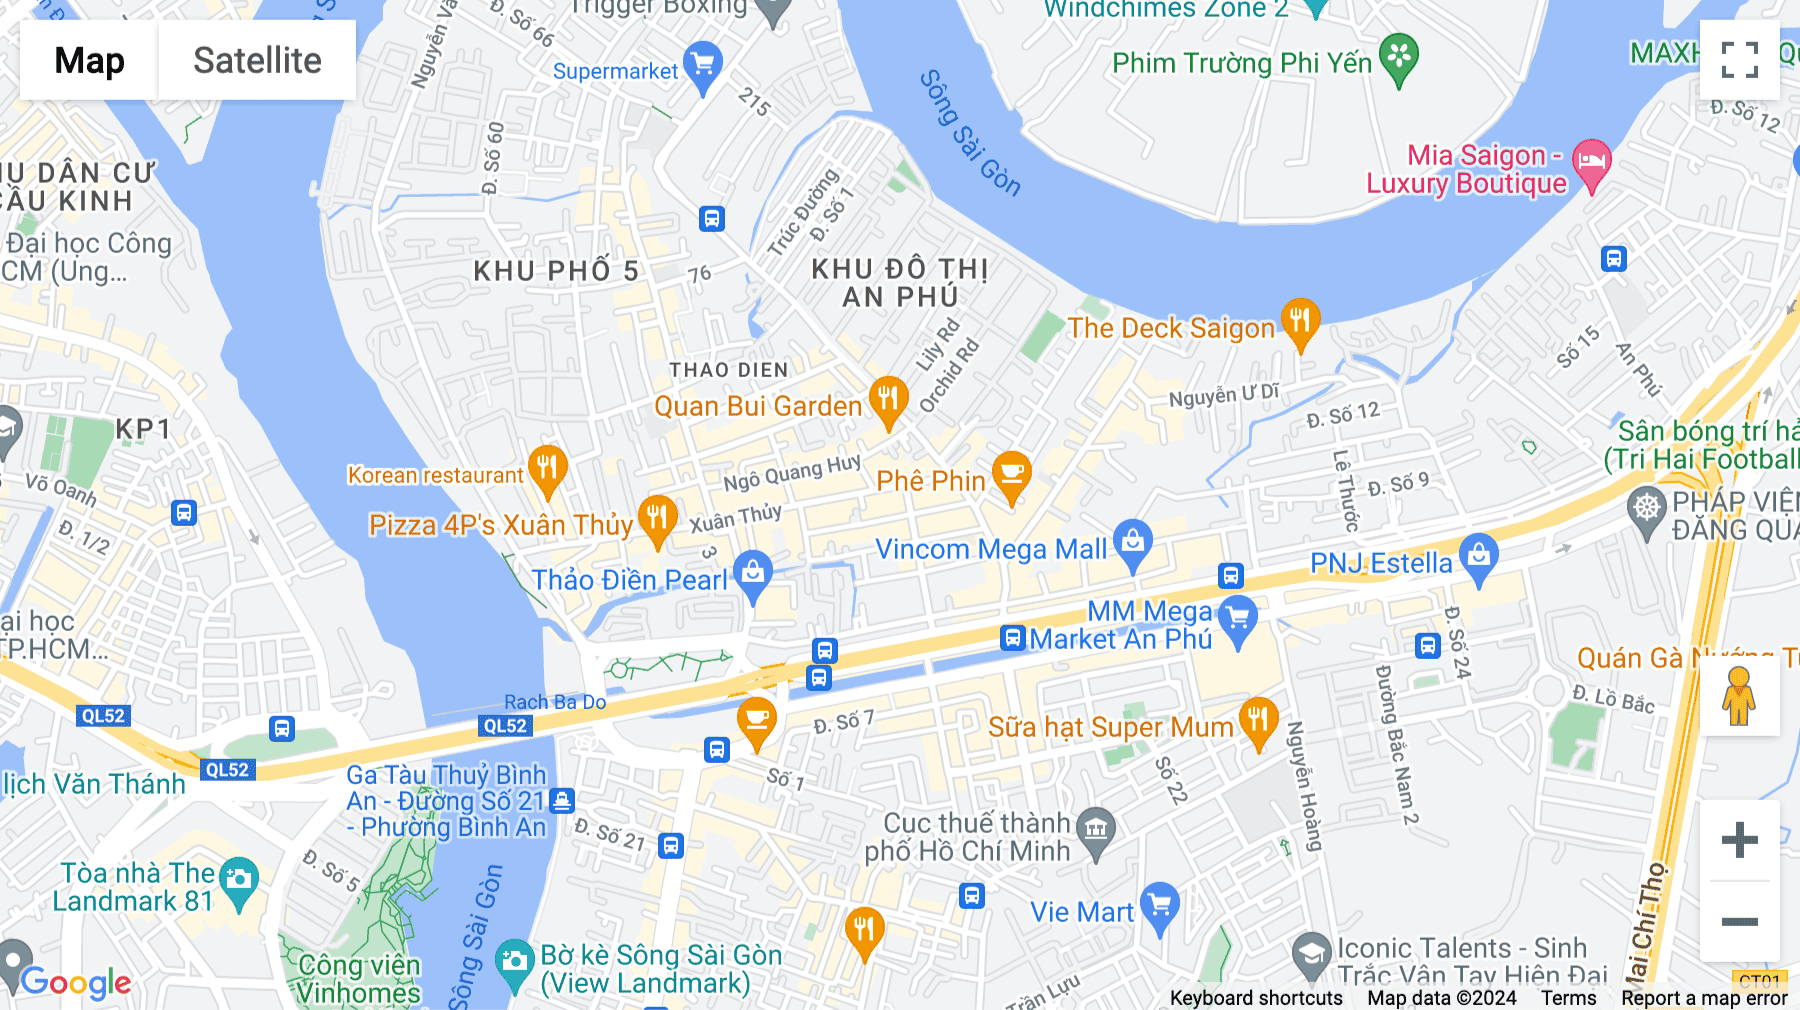 Click for interative map of the Hive Villa Saigon, 29 Nguyễn Bá Lan Street, Thao Dien Ward, District 2, Ho Chi Minh City